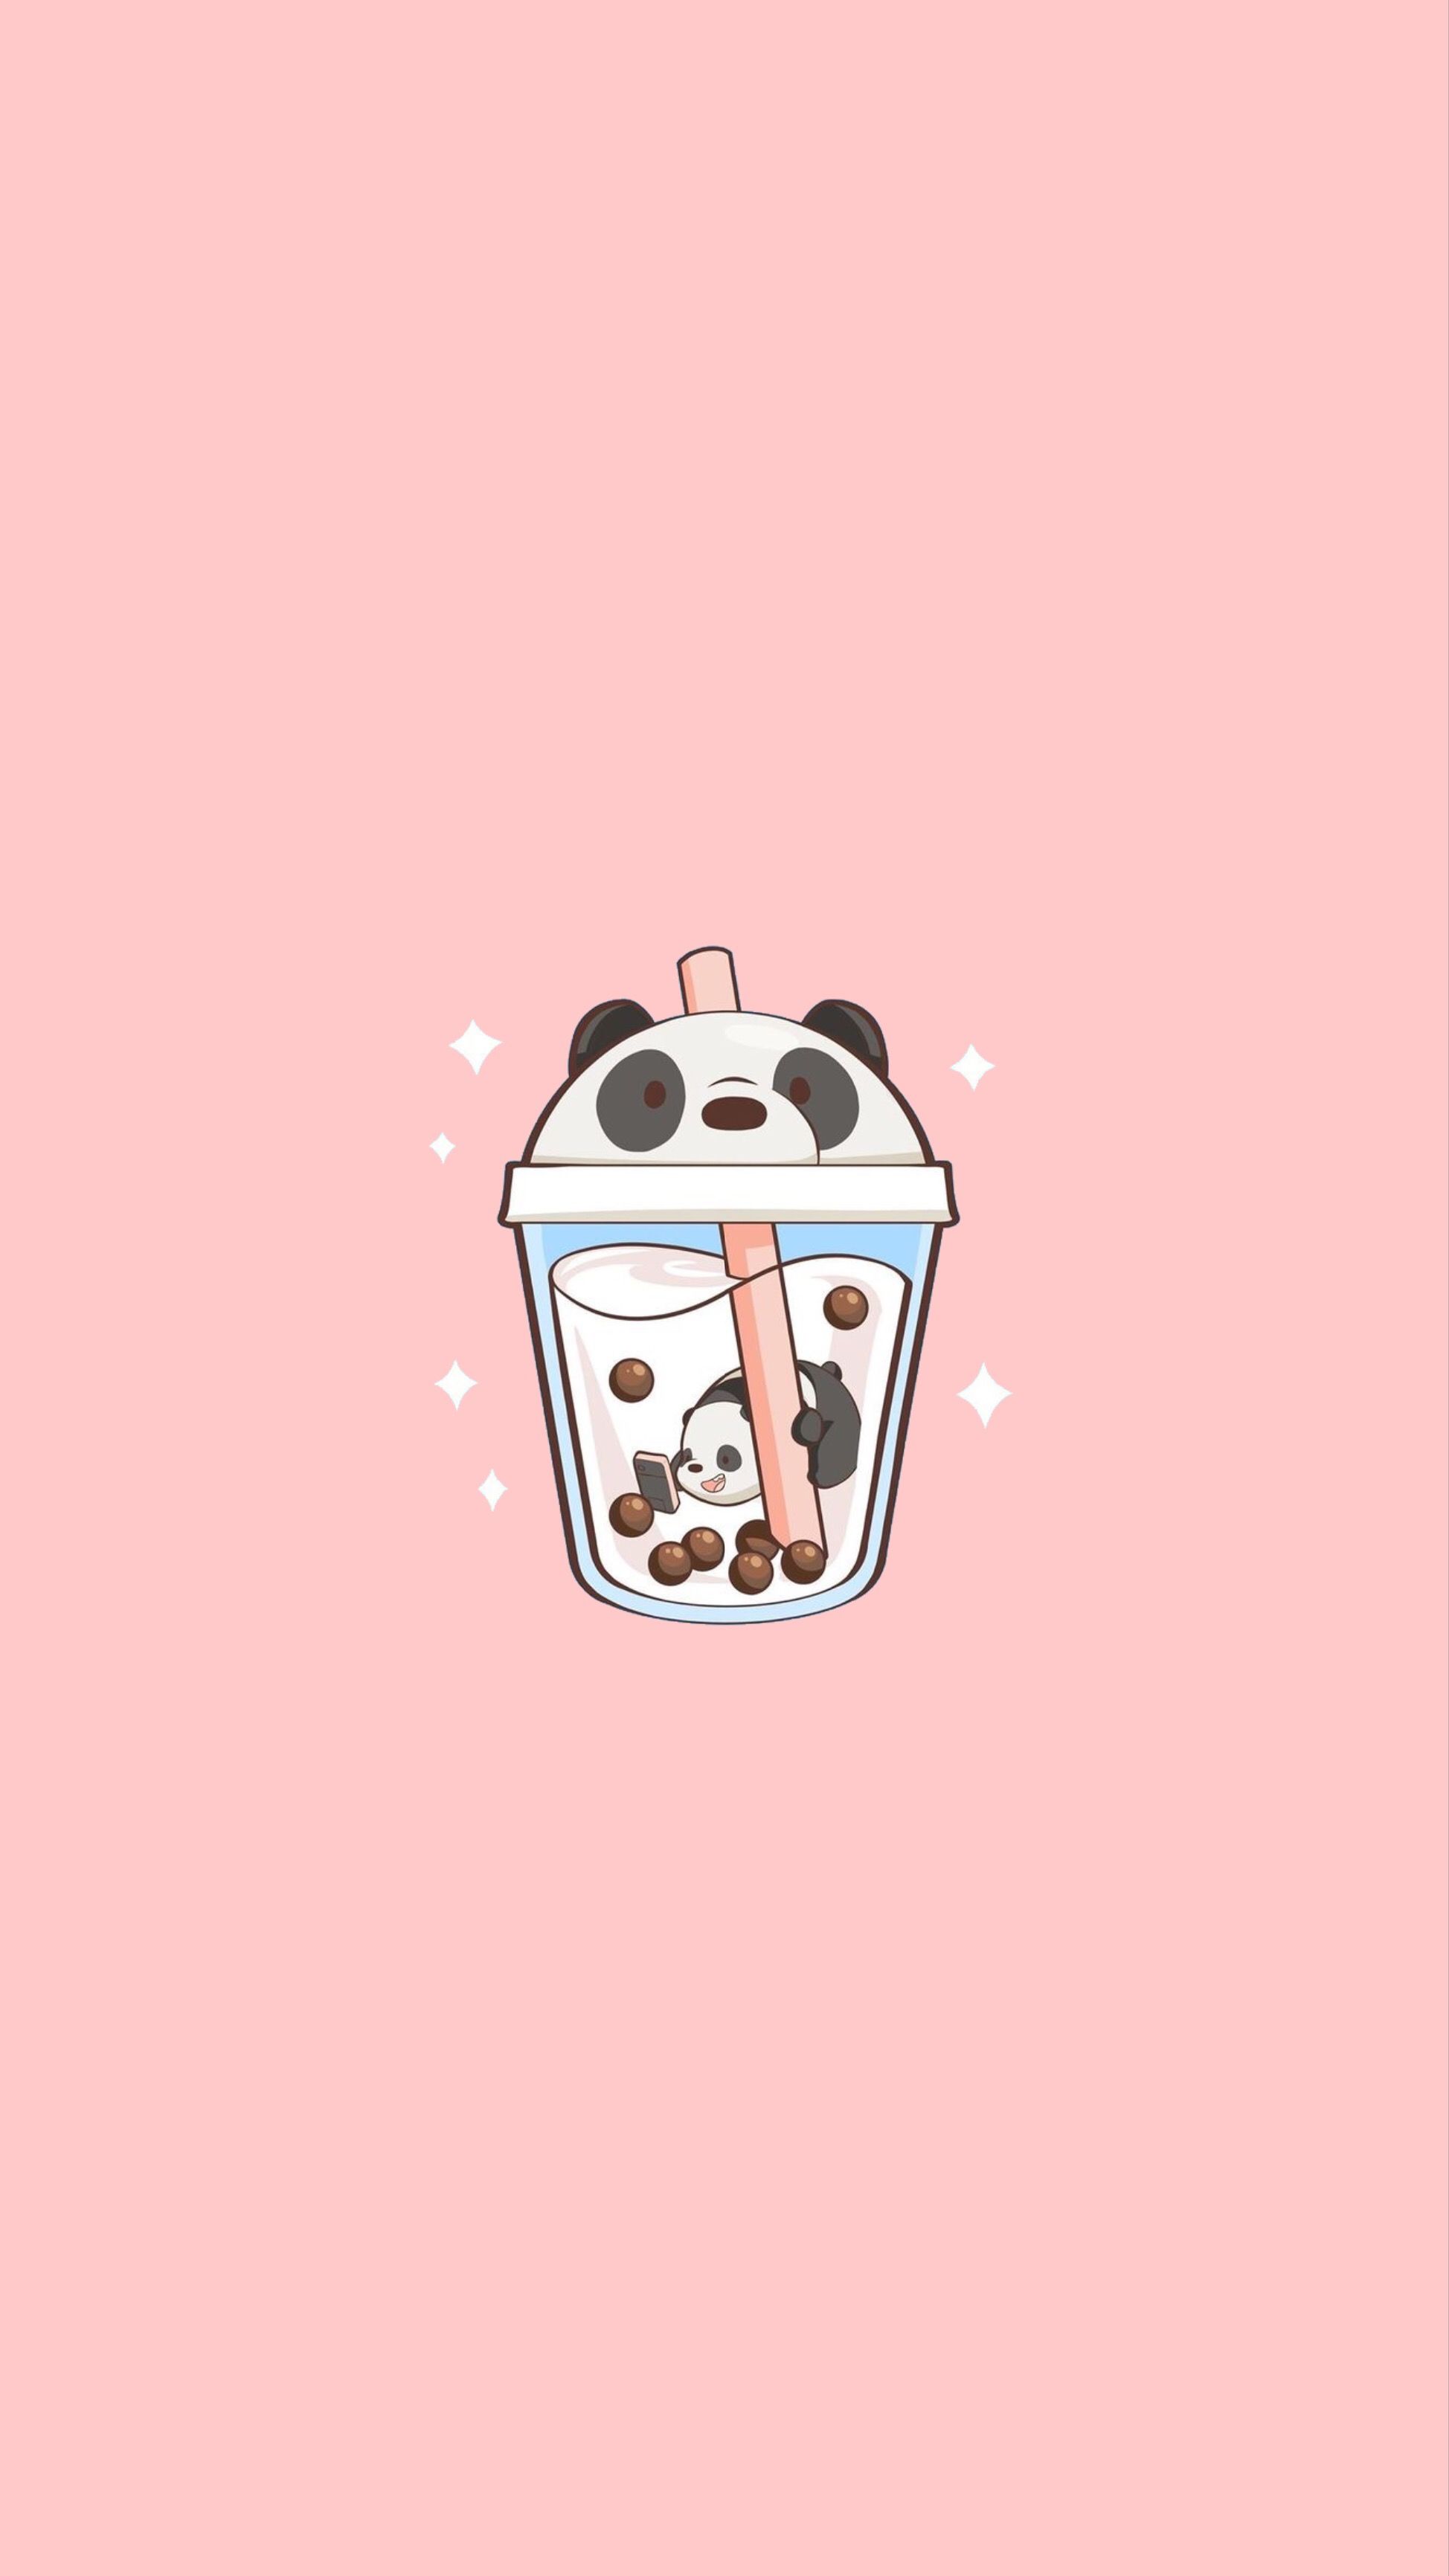 Wallpaper of a panda bear swimming in a glass of bubble tea - Panda